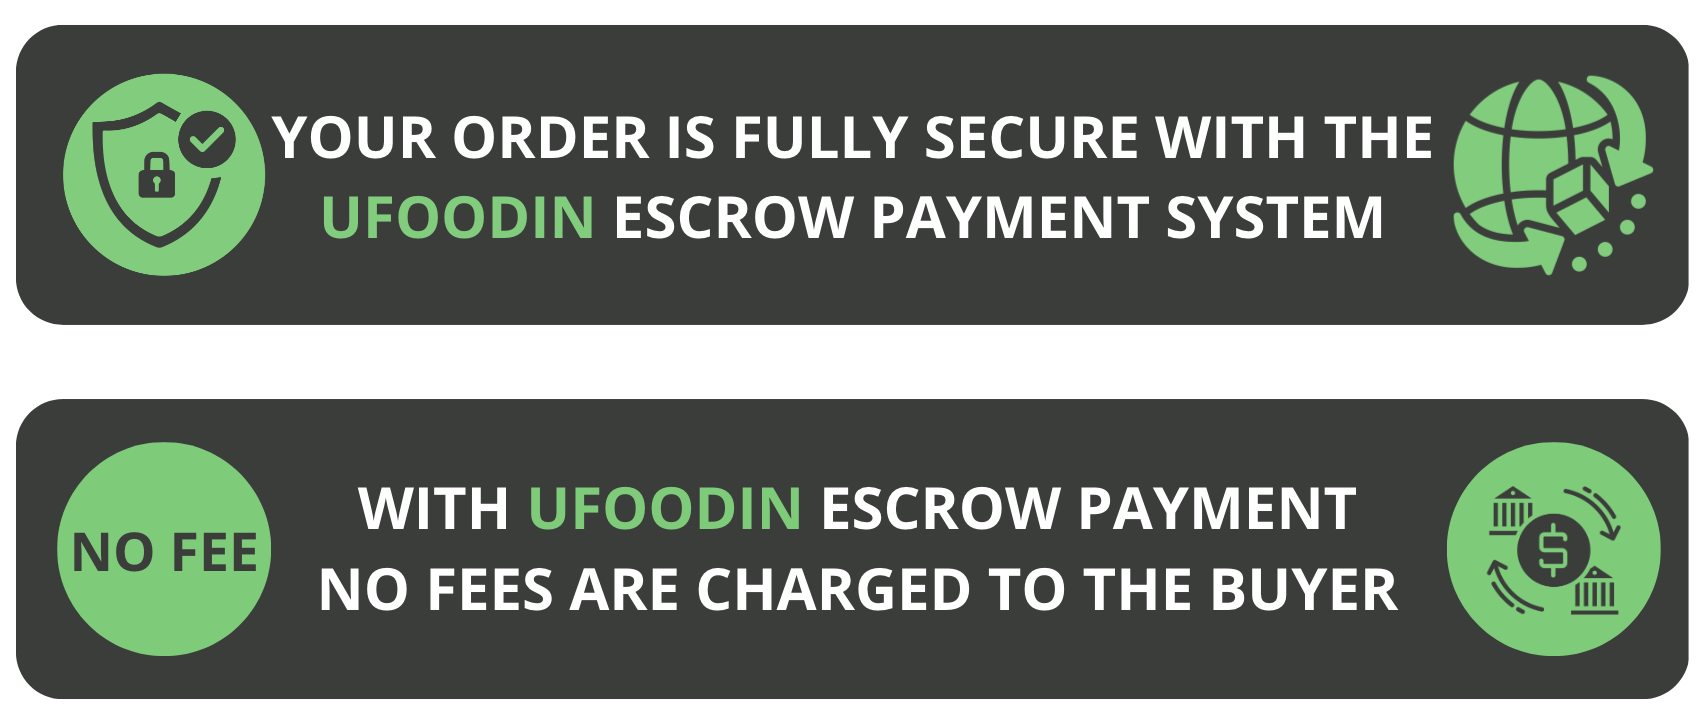 Payment through Escrow Account